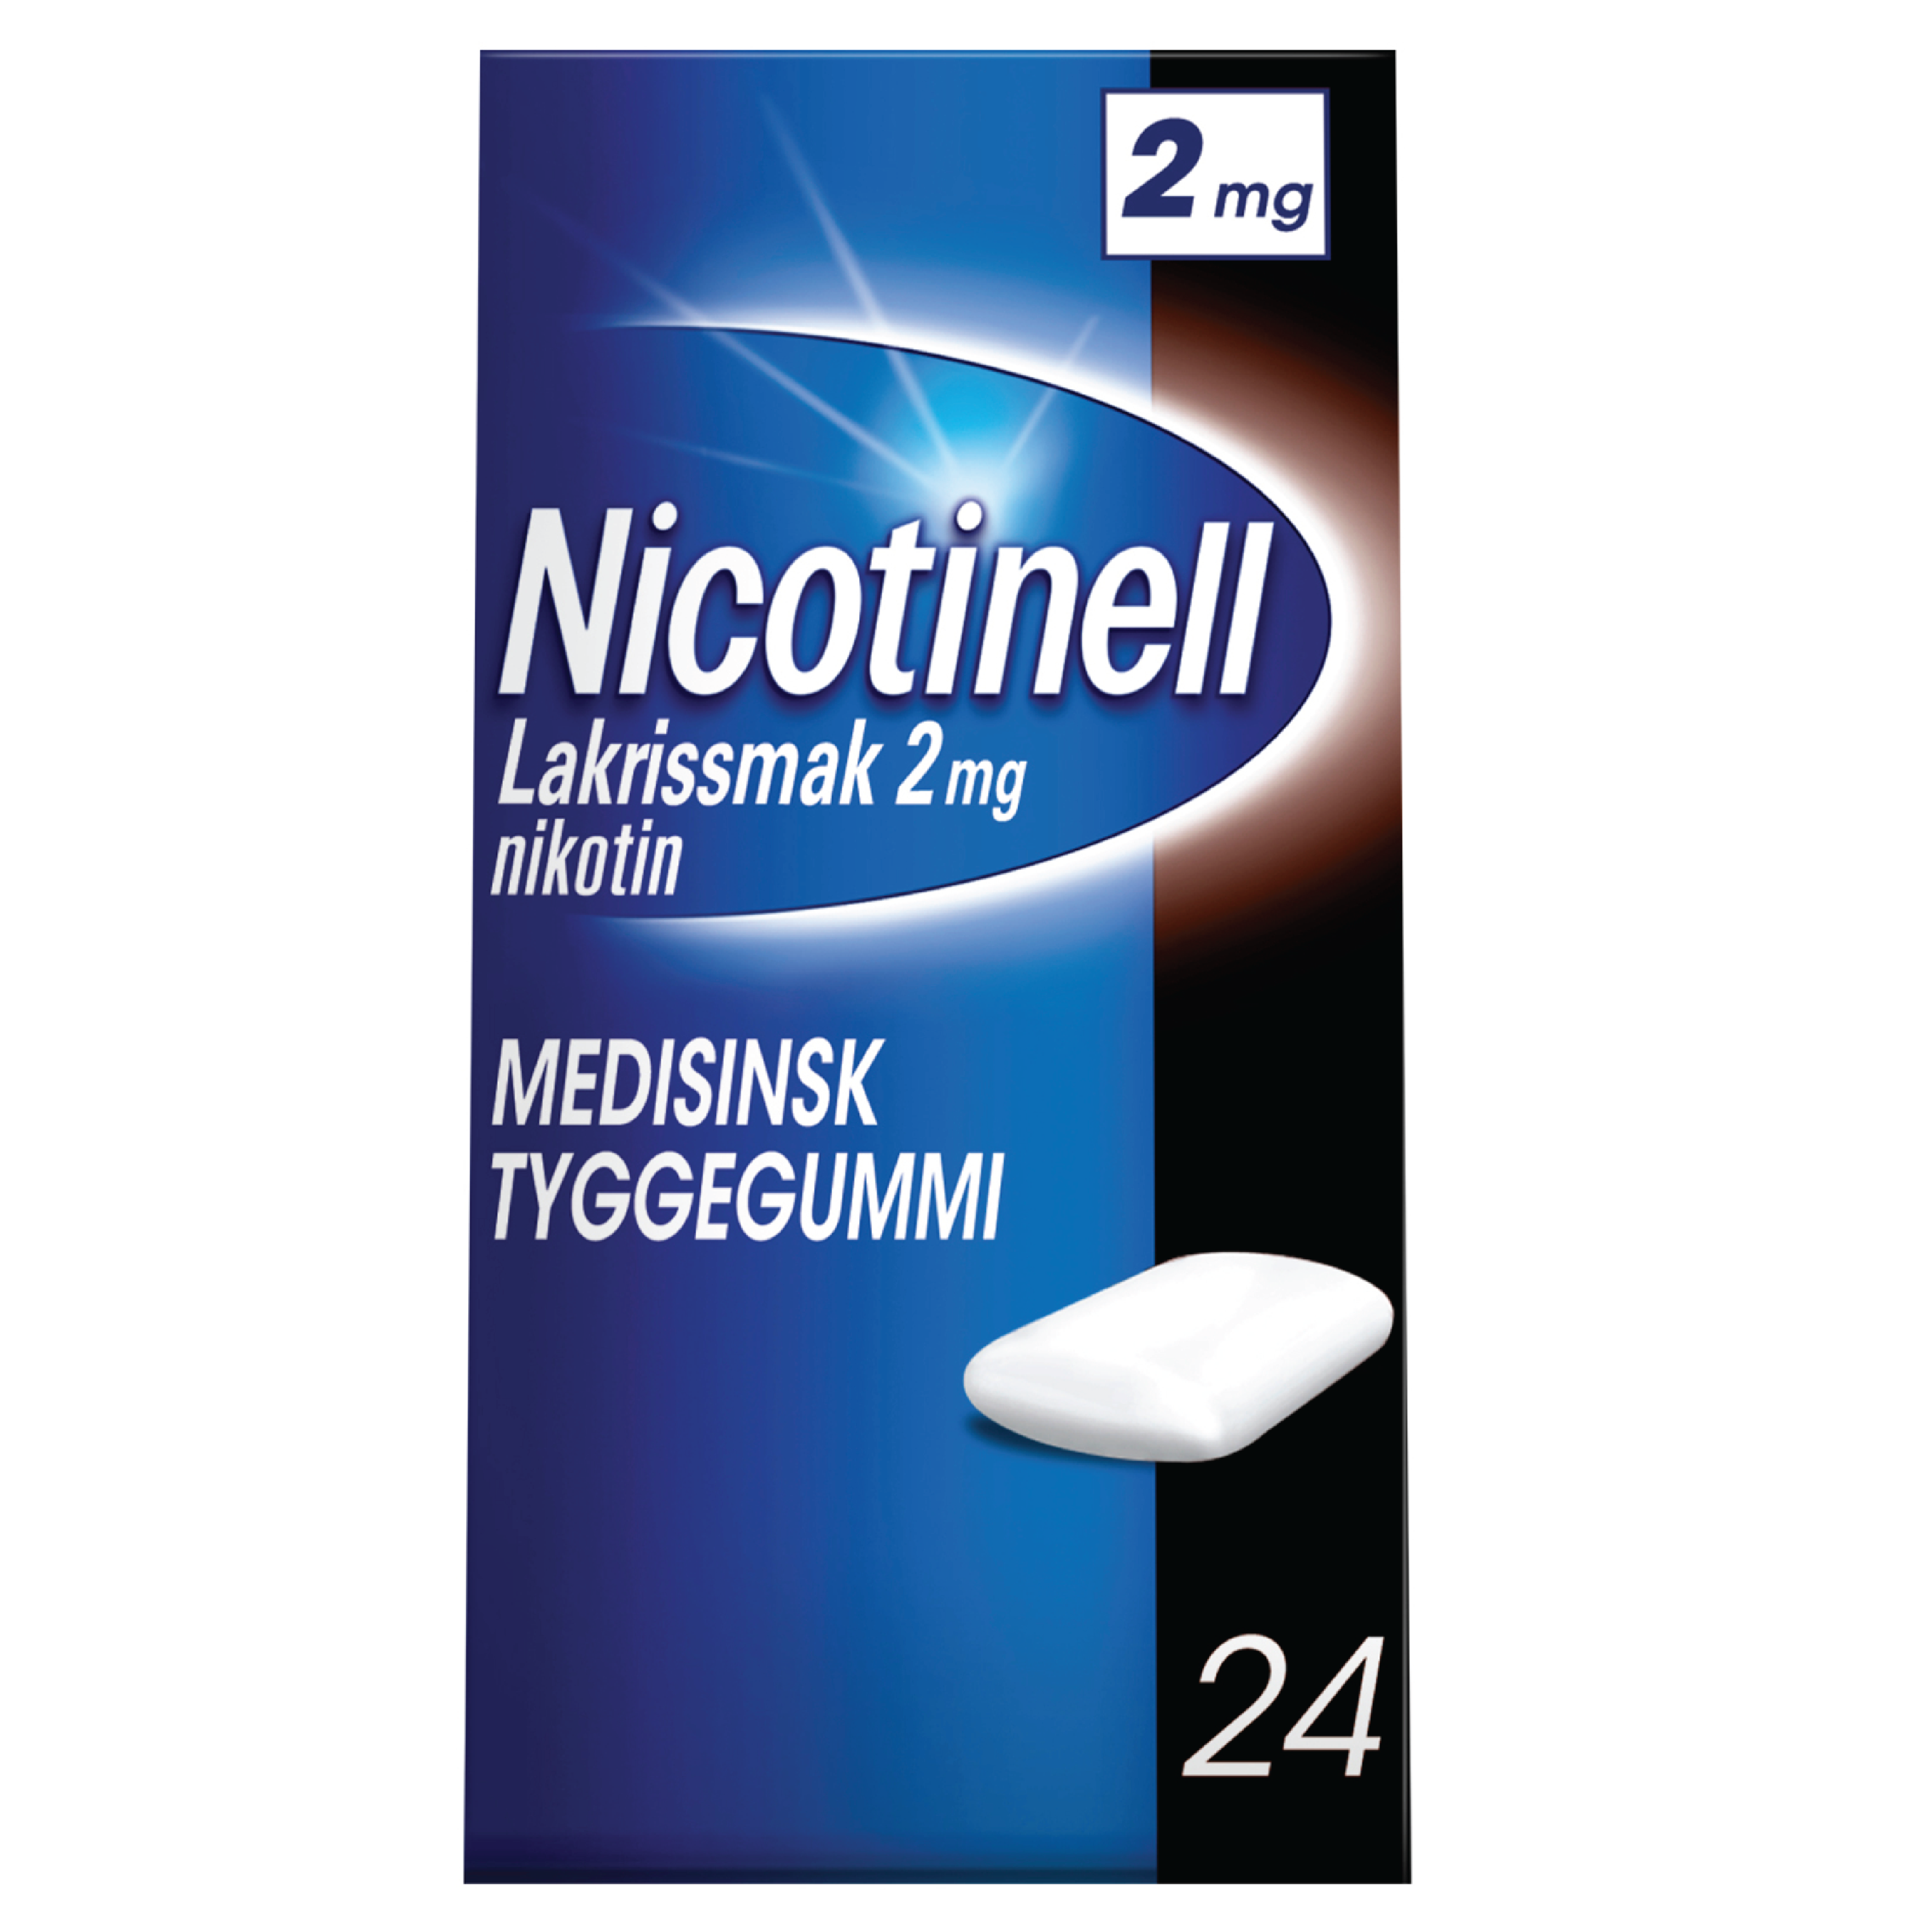 Nicotinell Tyggegummi 2mg lakris, 24 stk.